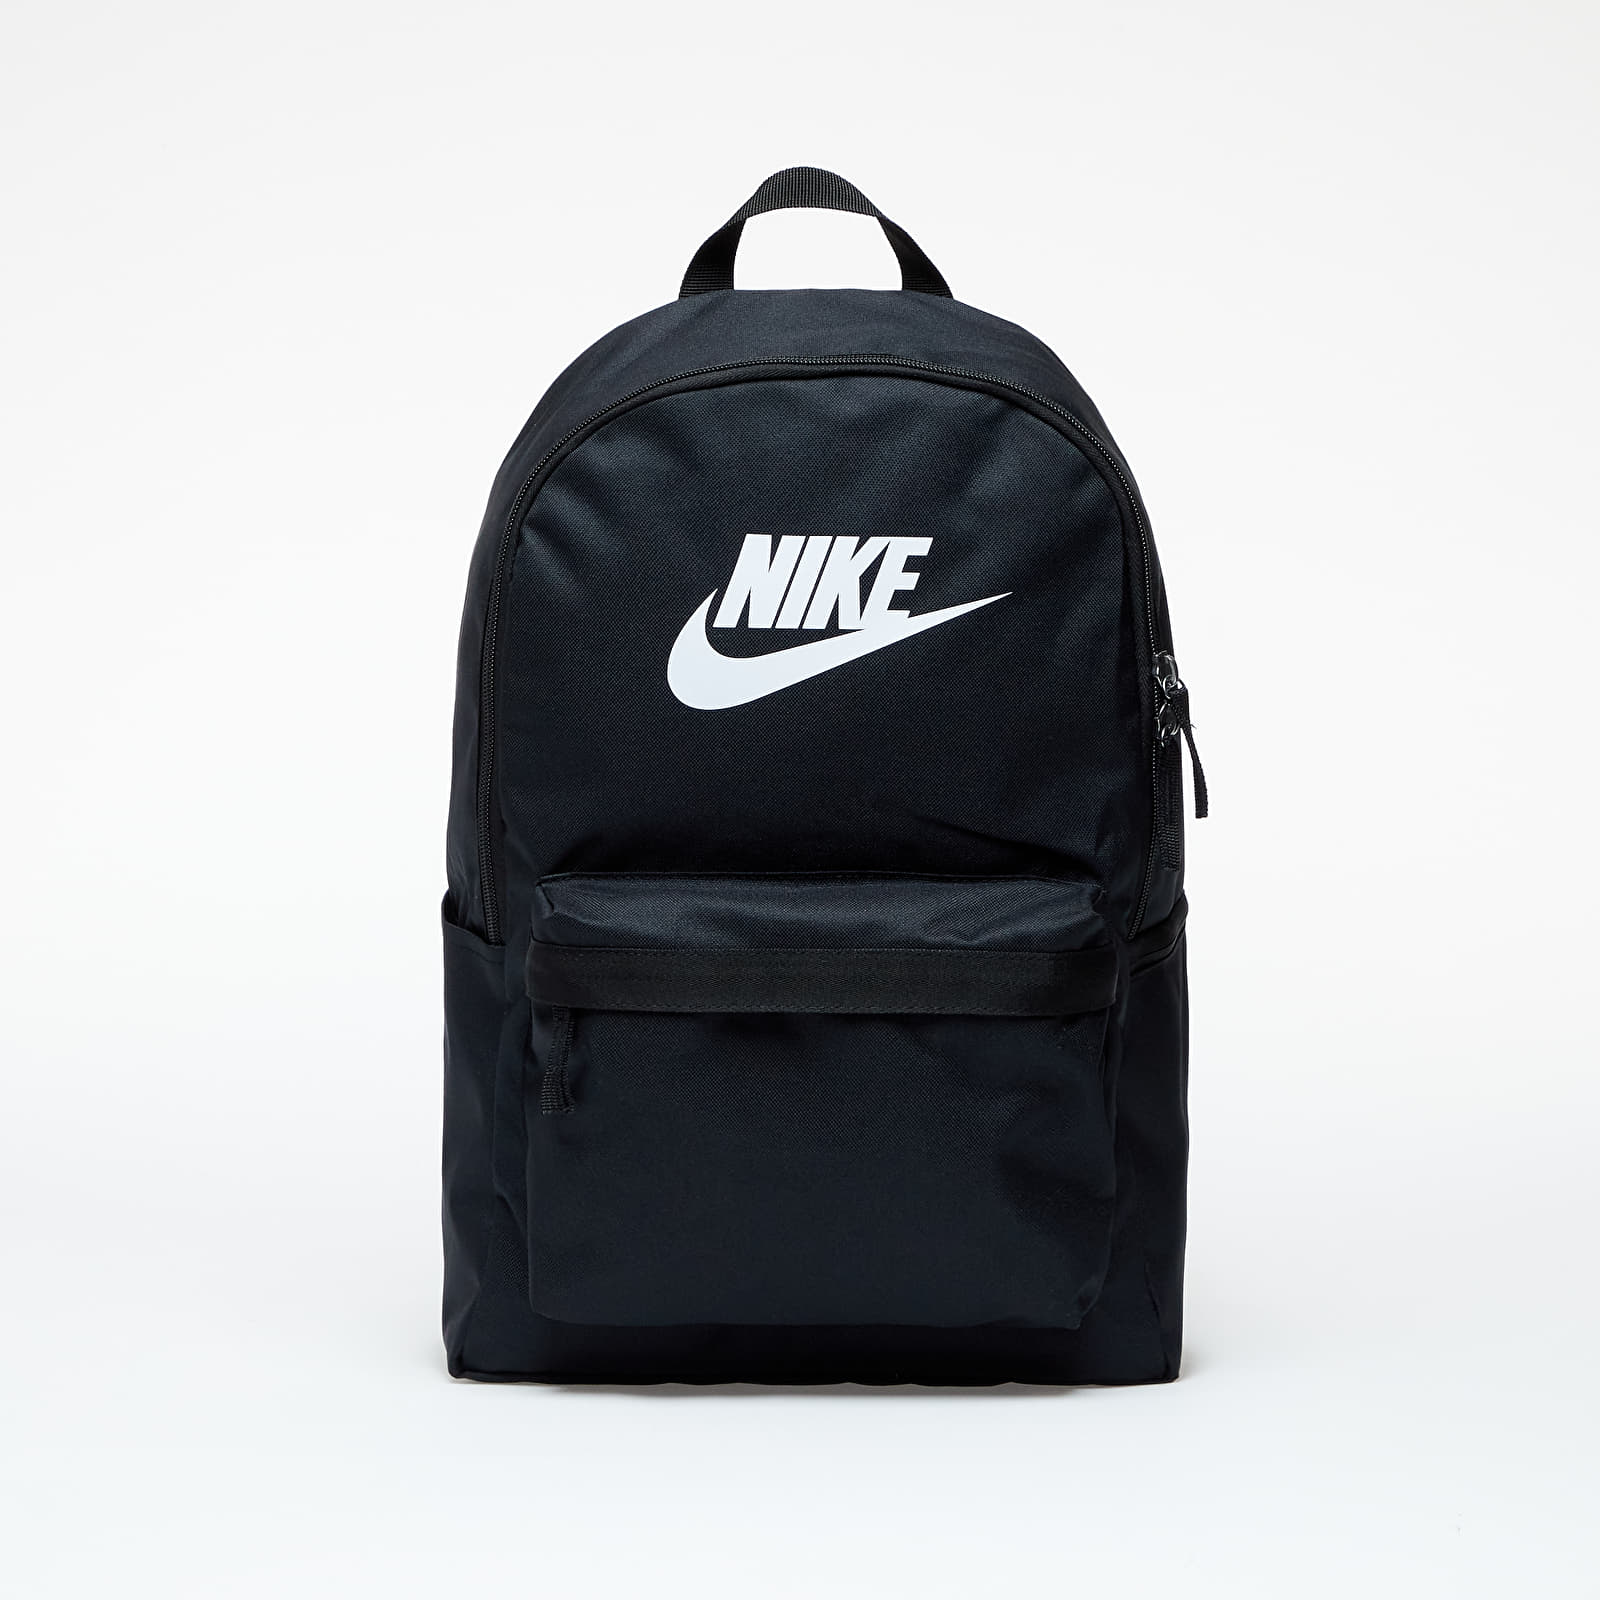 Plecaki Nike Backpack Black/ Black/ White